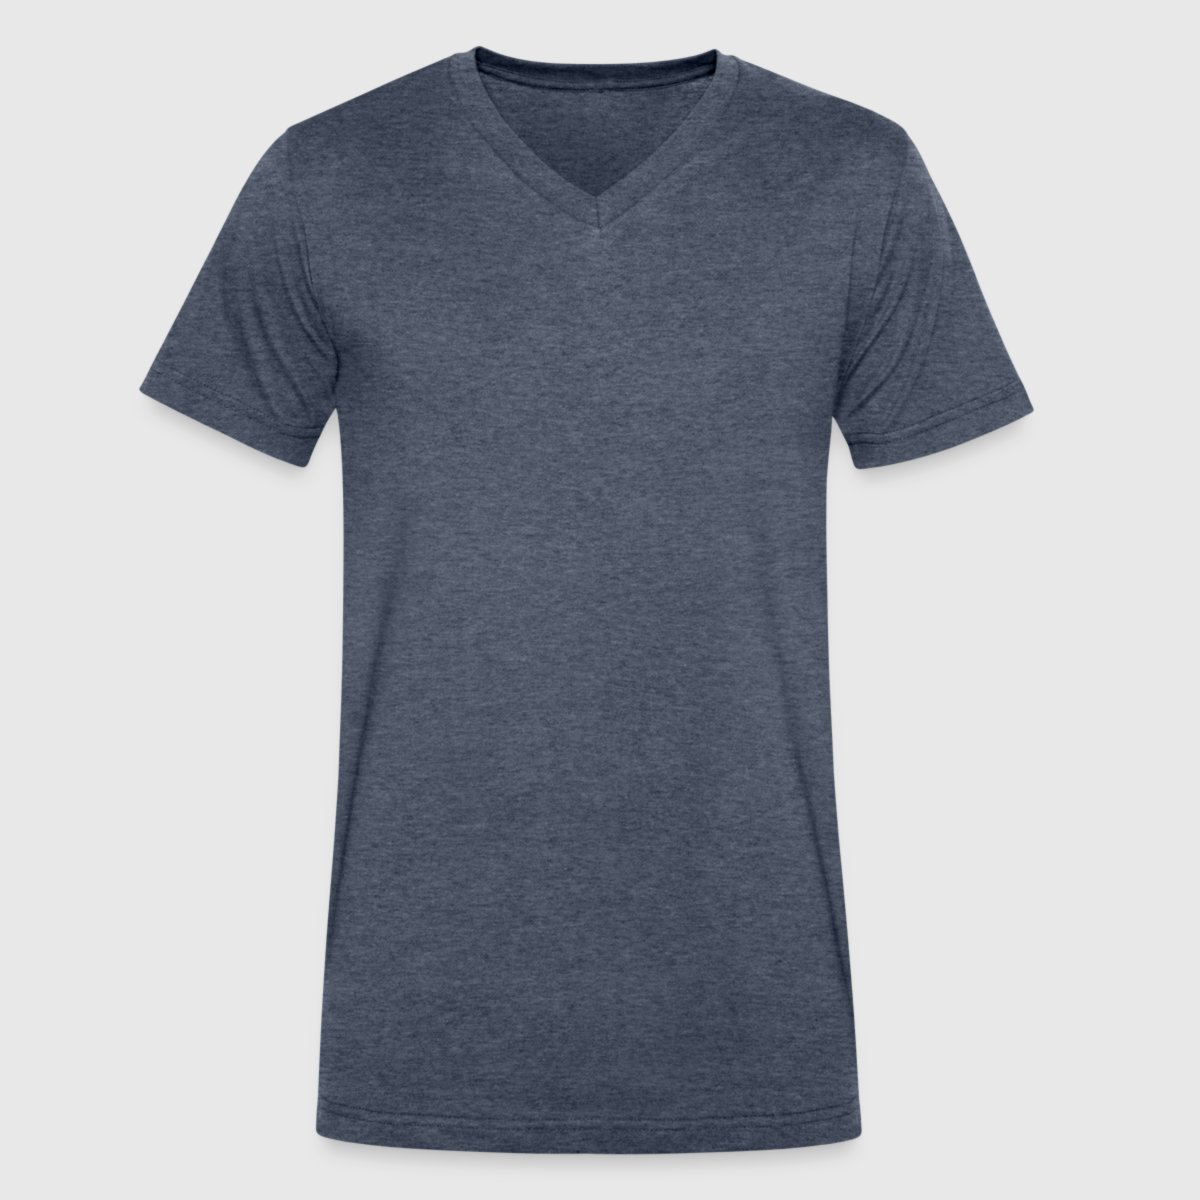 Men's V-Neck T-Shirt by Canvas - Front